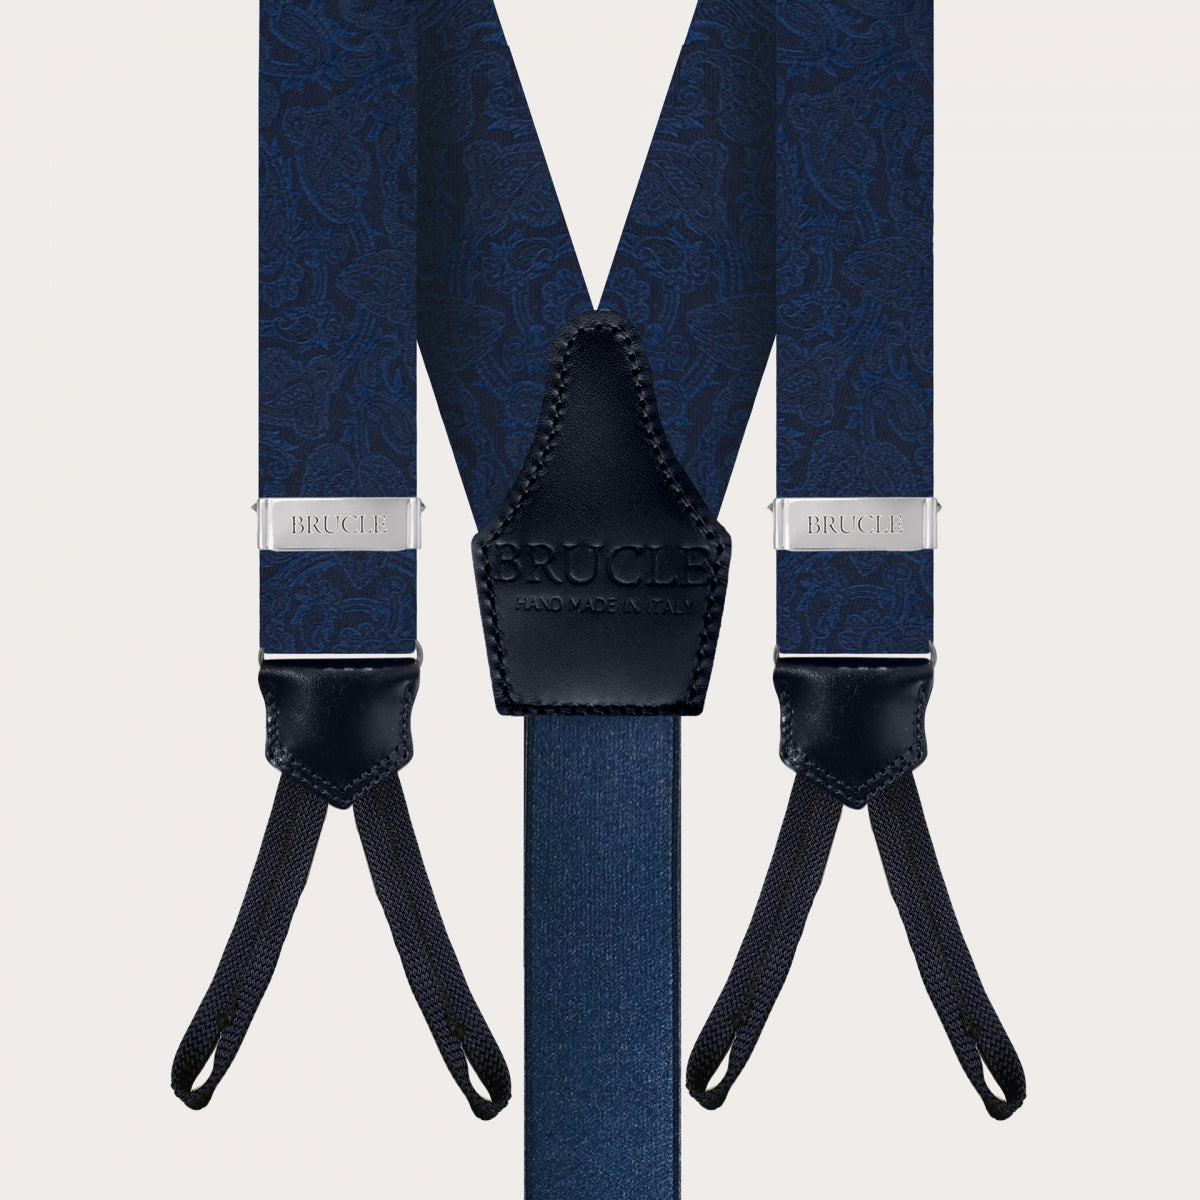 Silk braces with buttonholes, tone-on-tone blue paisley pattern